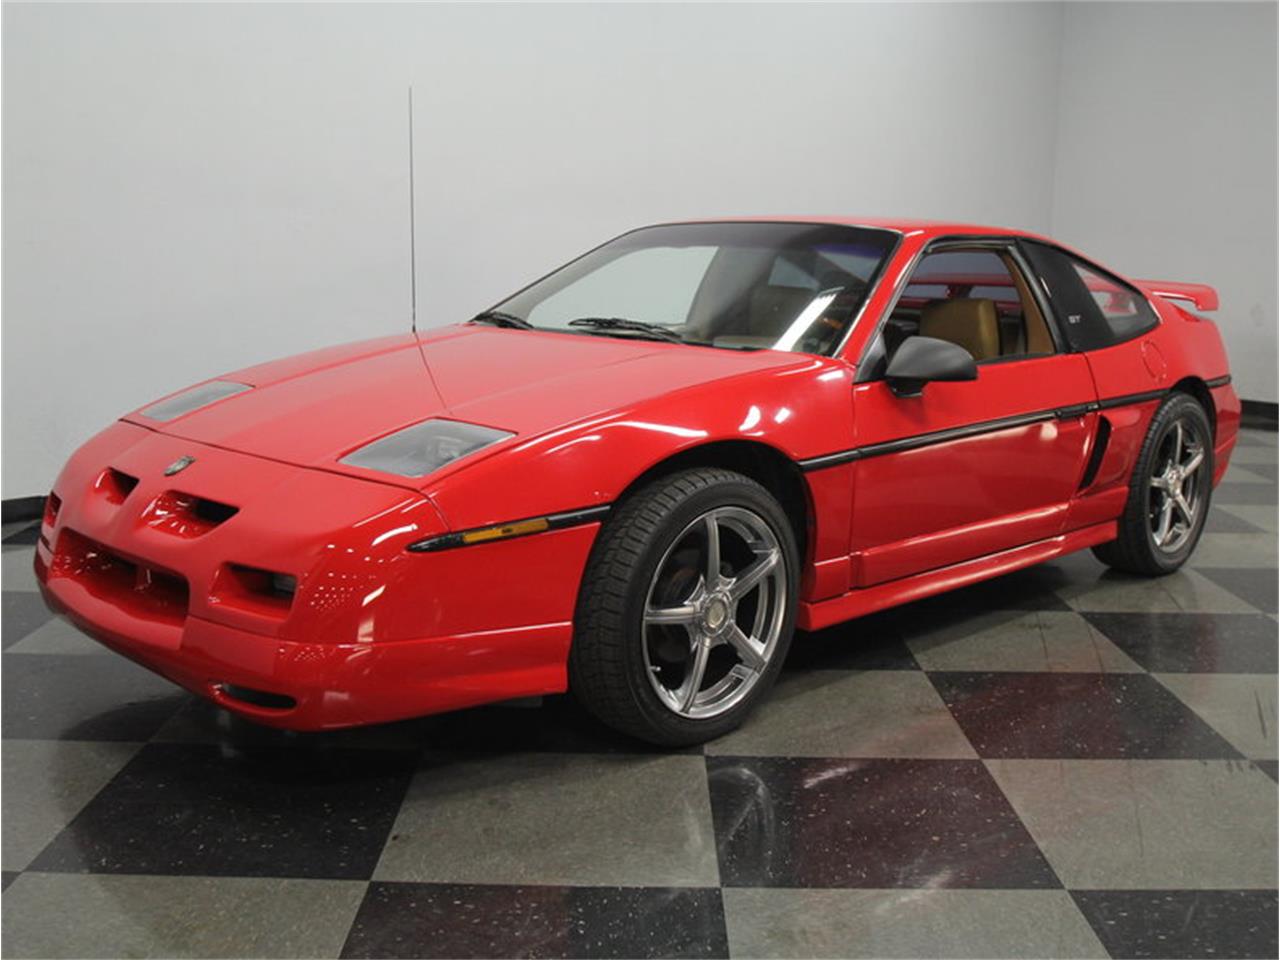 For Sale: 1988 Pontiac Fiero GT V8 in Concord, North Carolina.